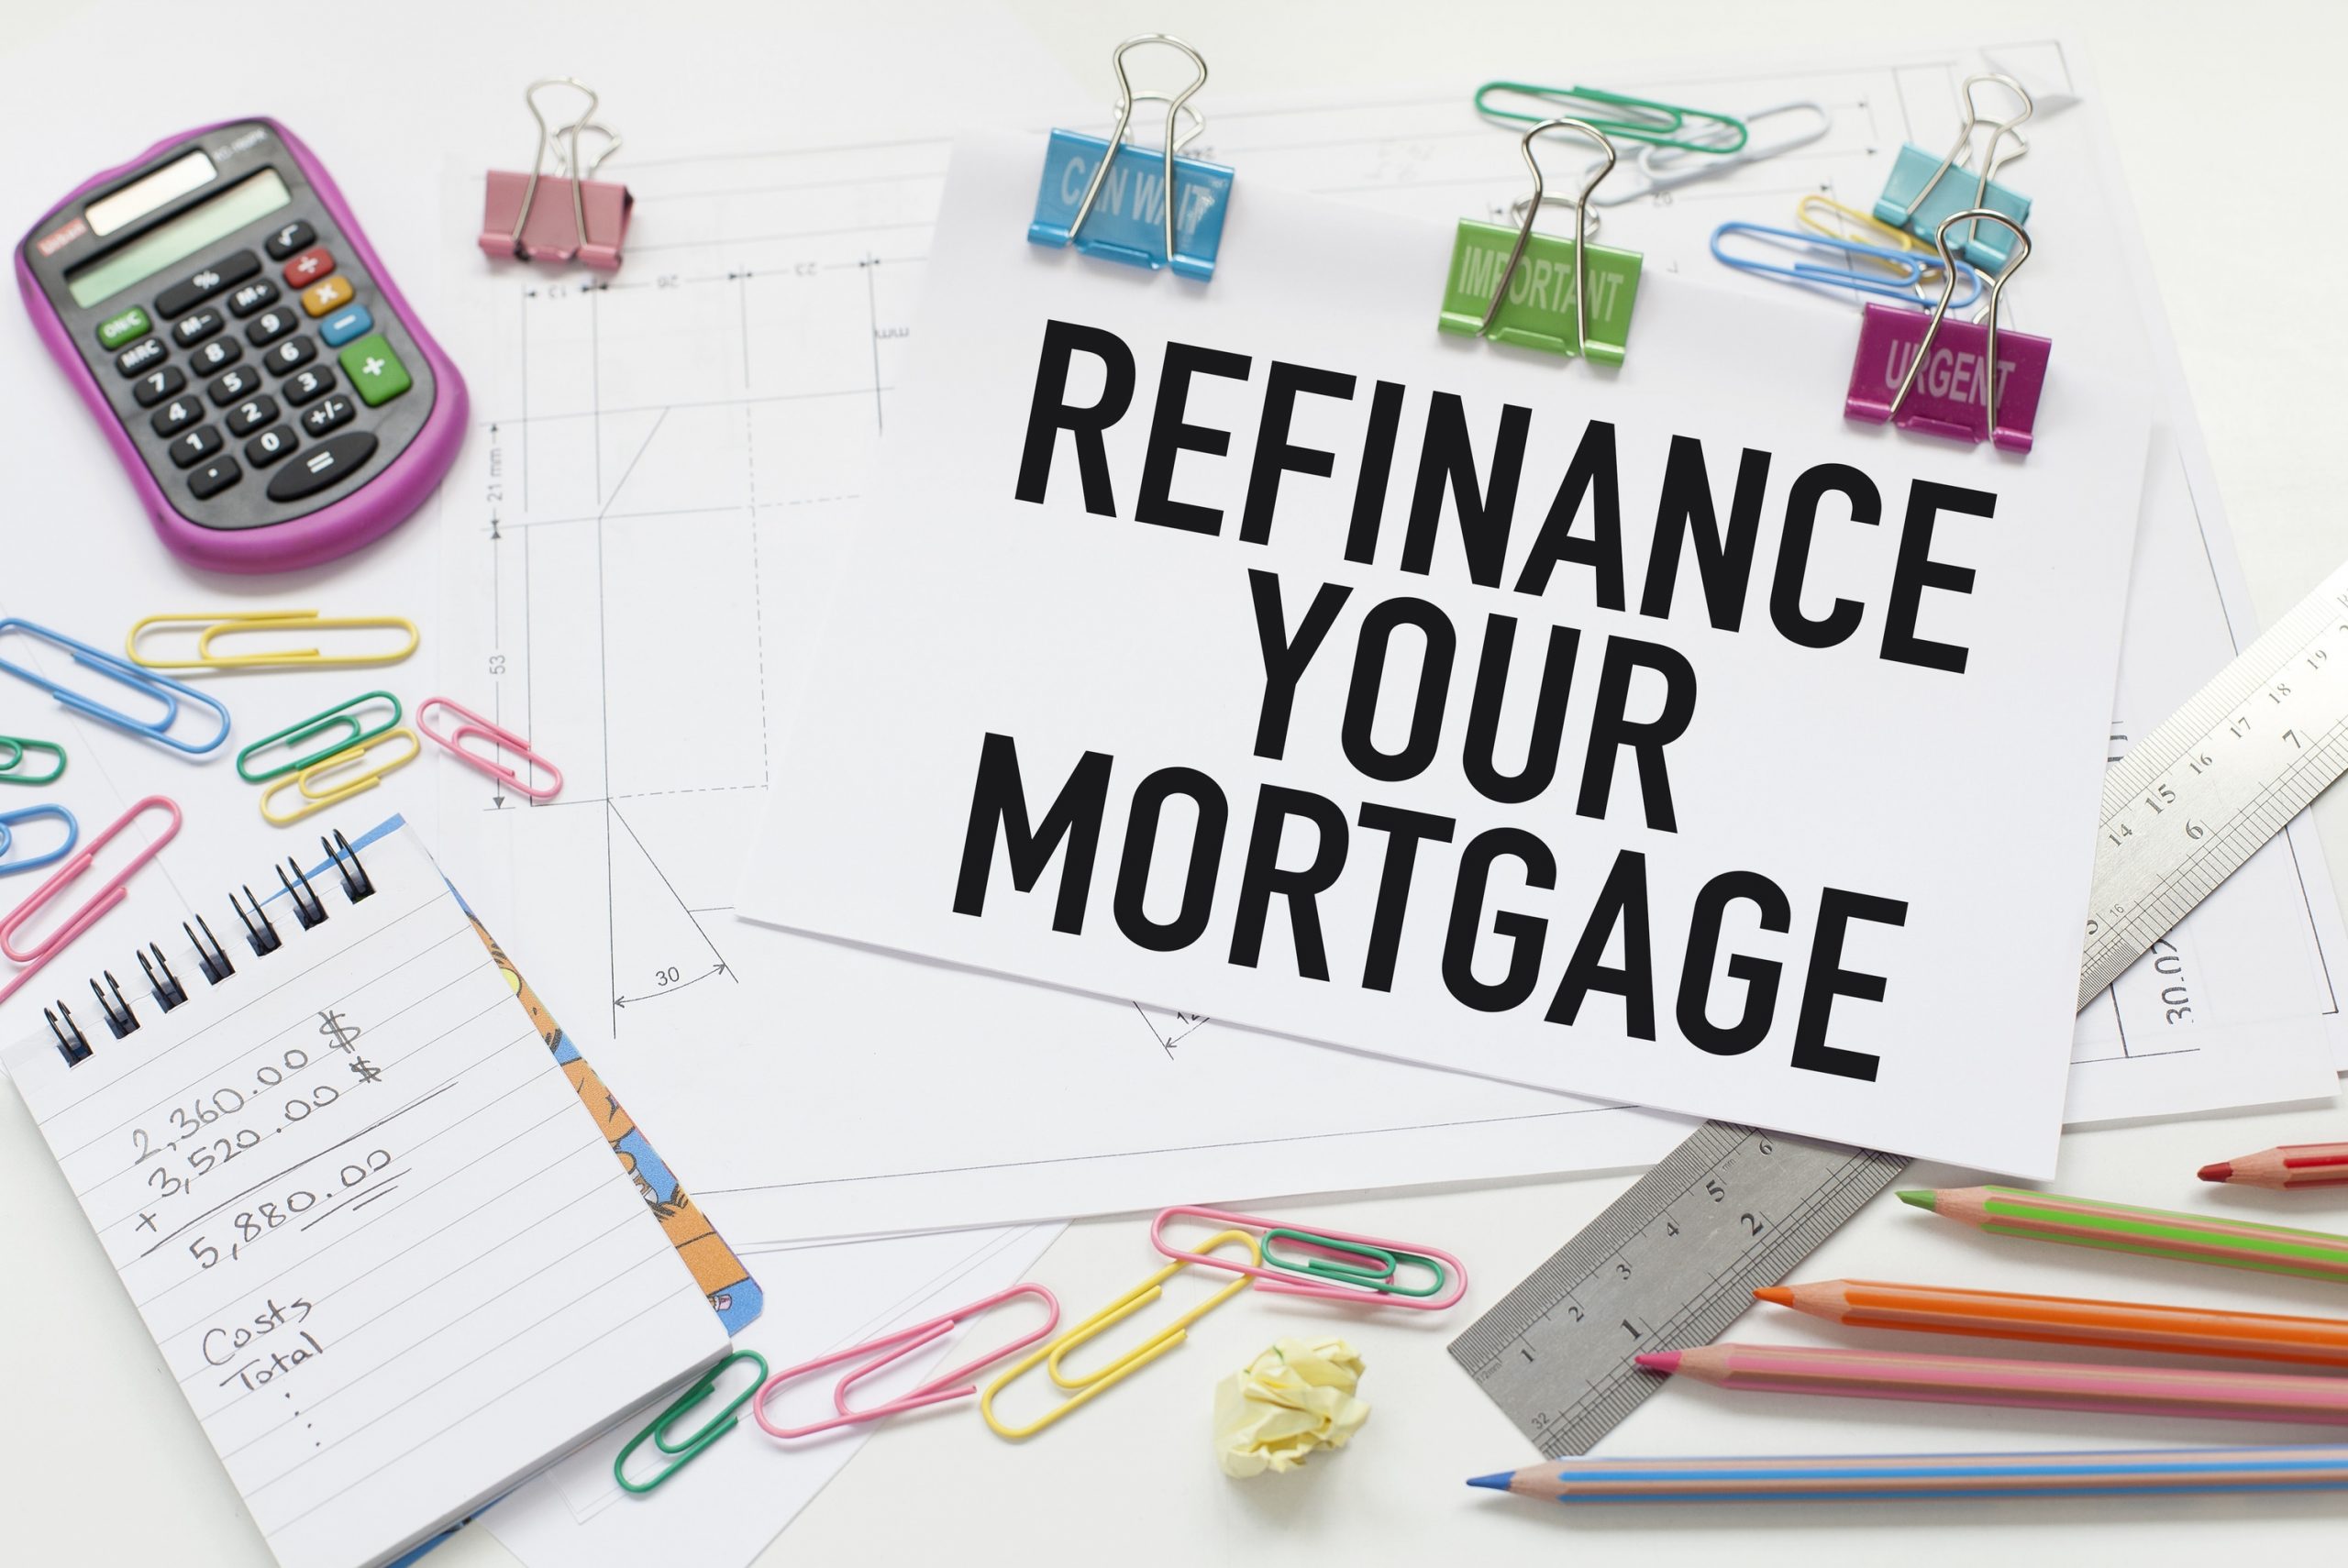 Texas Mortgage Refinance